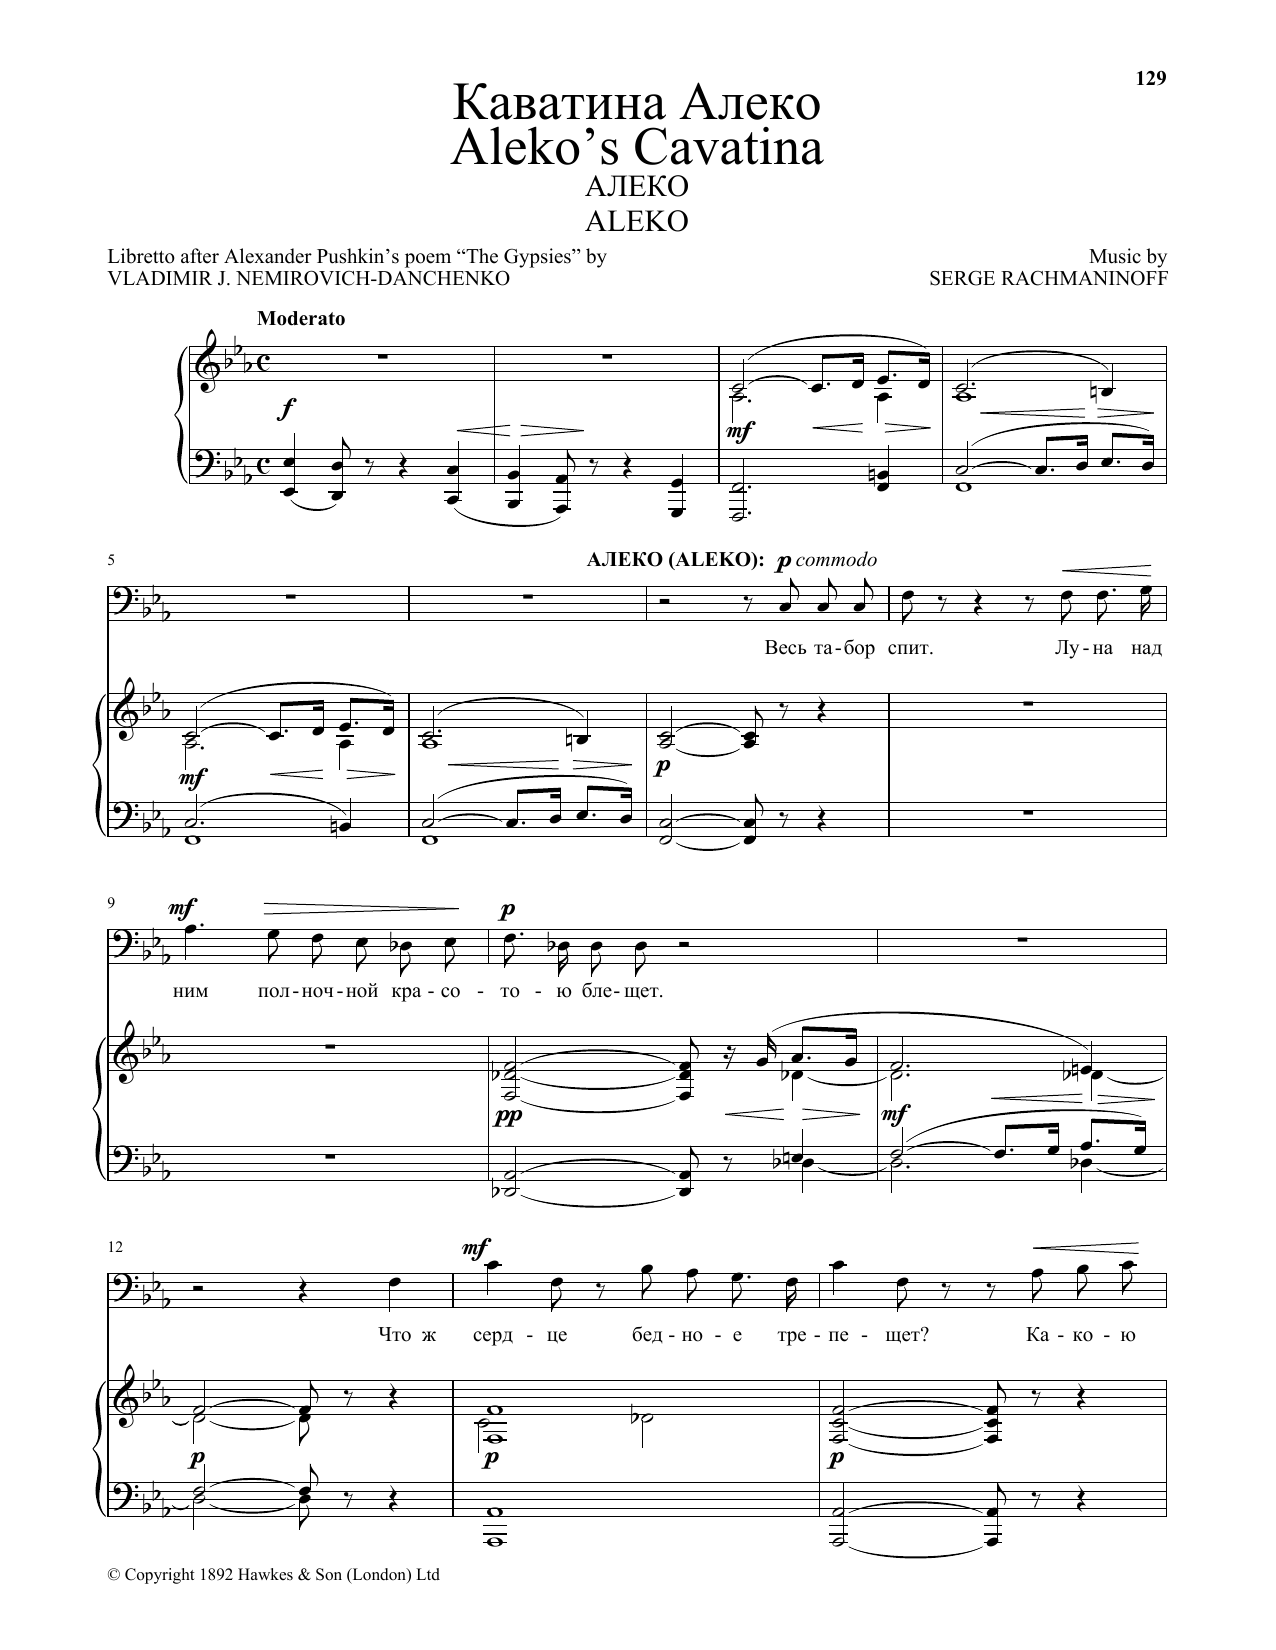 Download Sergei Rachmaninoff Aleko's Cavatina Sheet Music